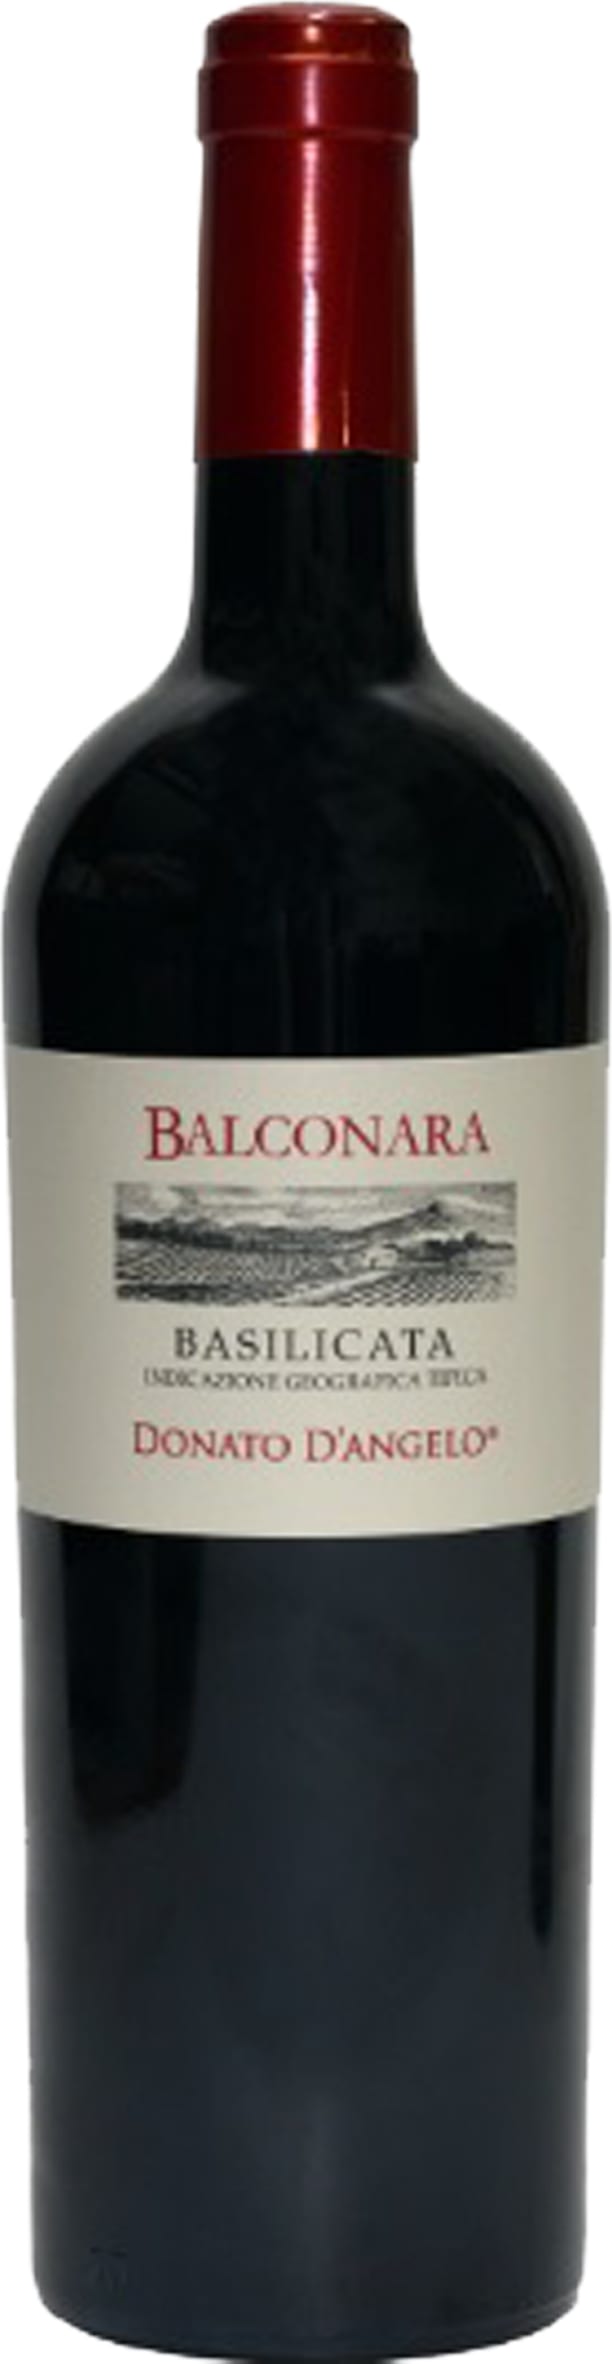 Azienda Agricola Donato d'Angelo Balconara IGT Basilicata Rosso 2017 75cl - Buy Azienda Agricola Donato d'Angelo Wines from GREAT WINES DIRECT wine shop